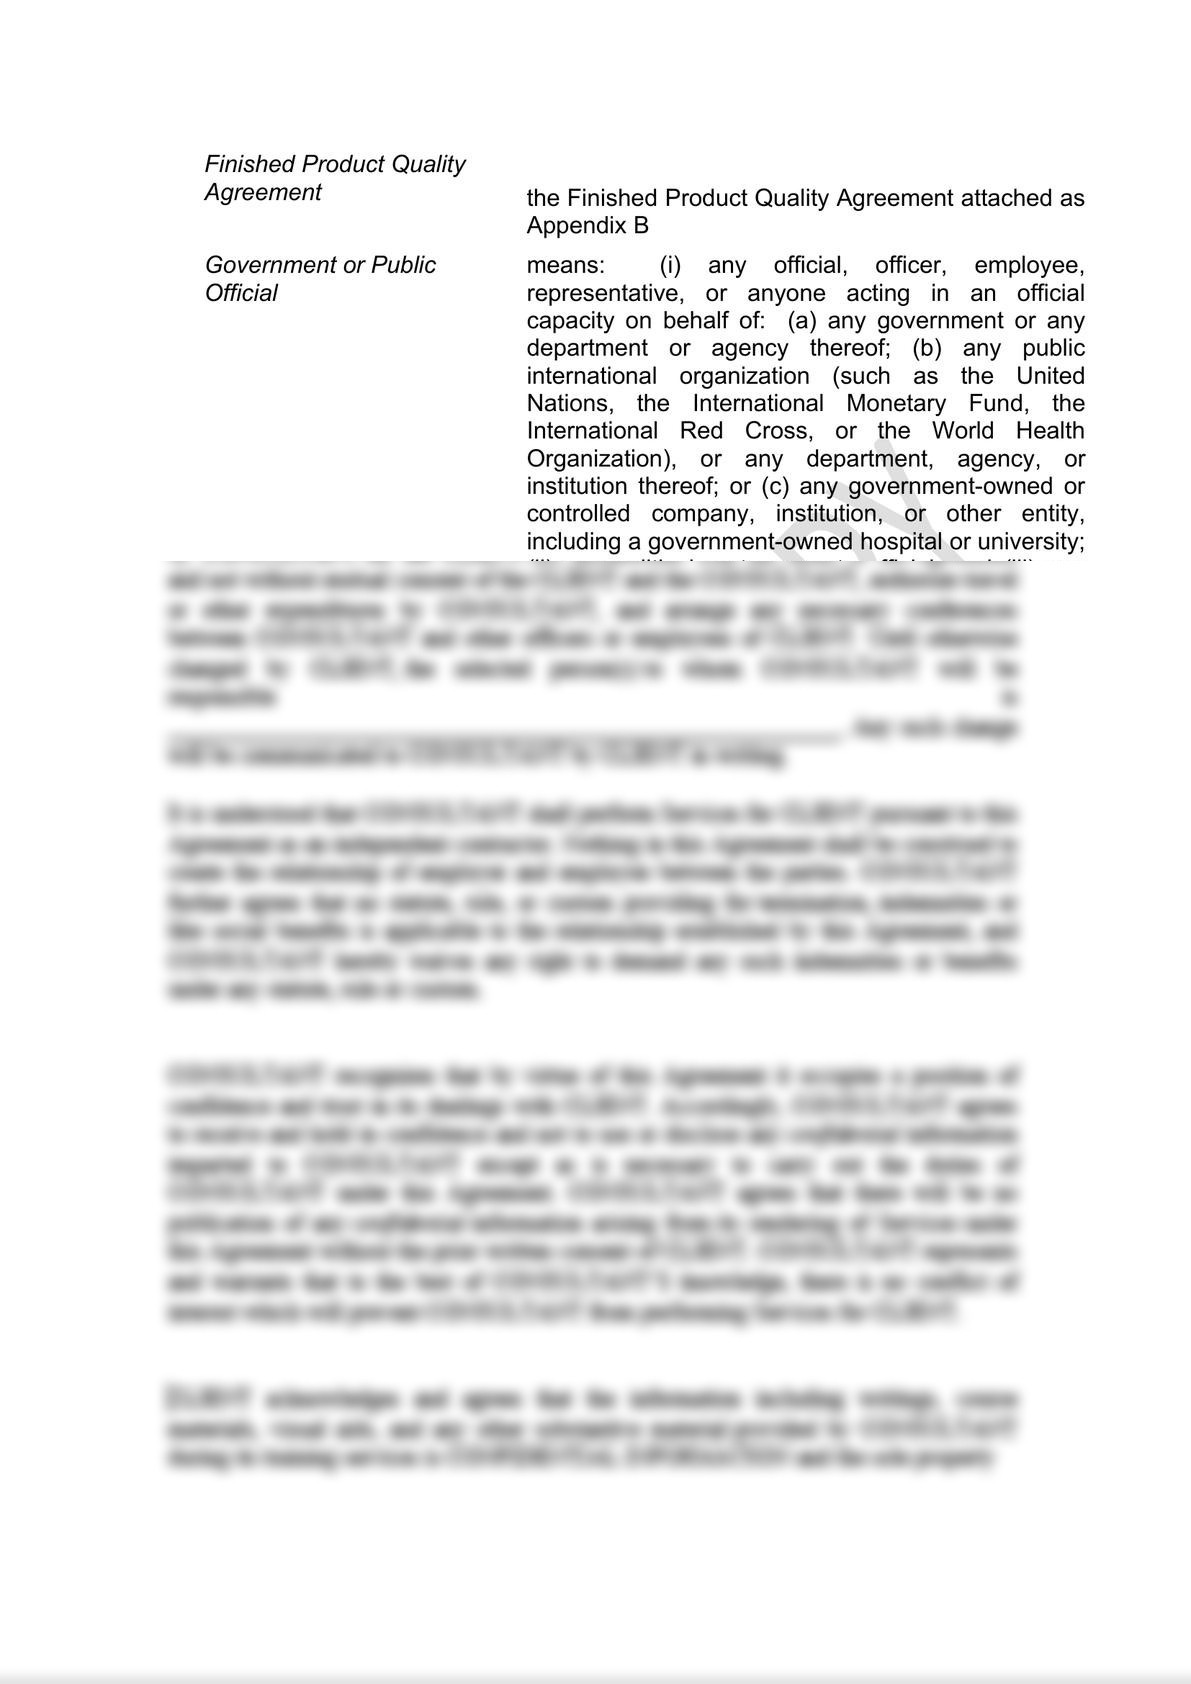 Distribution Agreement Draft (ii)-4